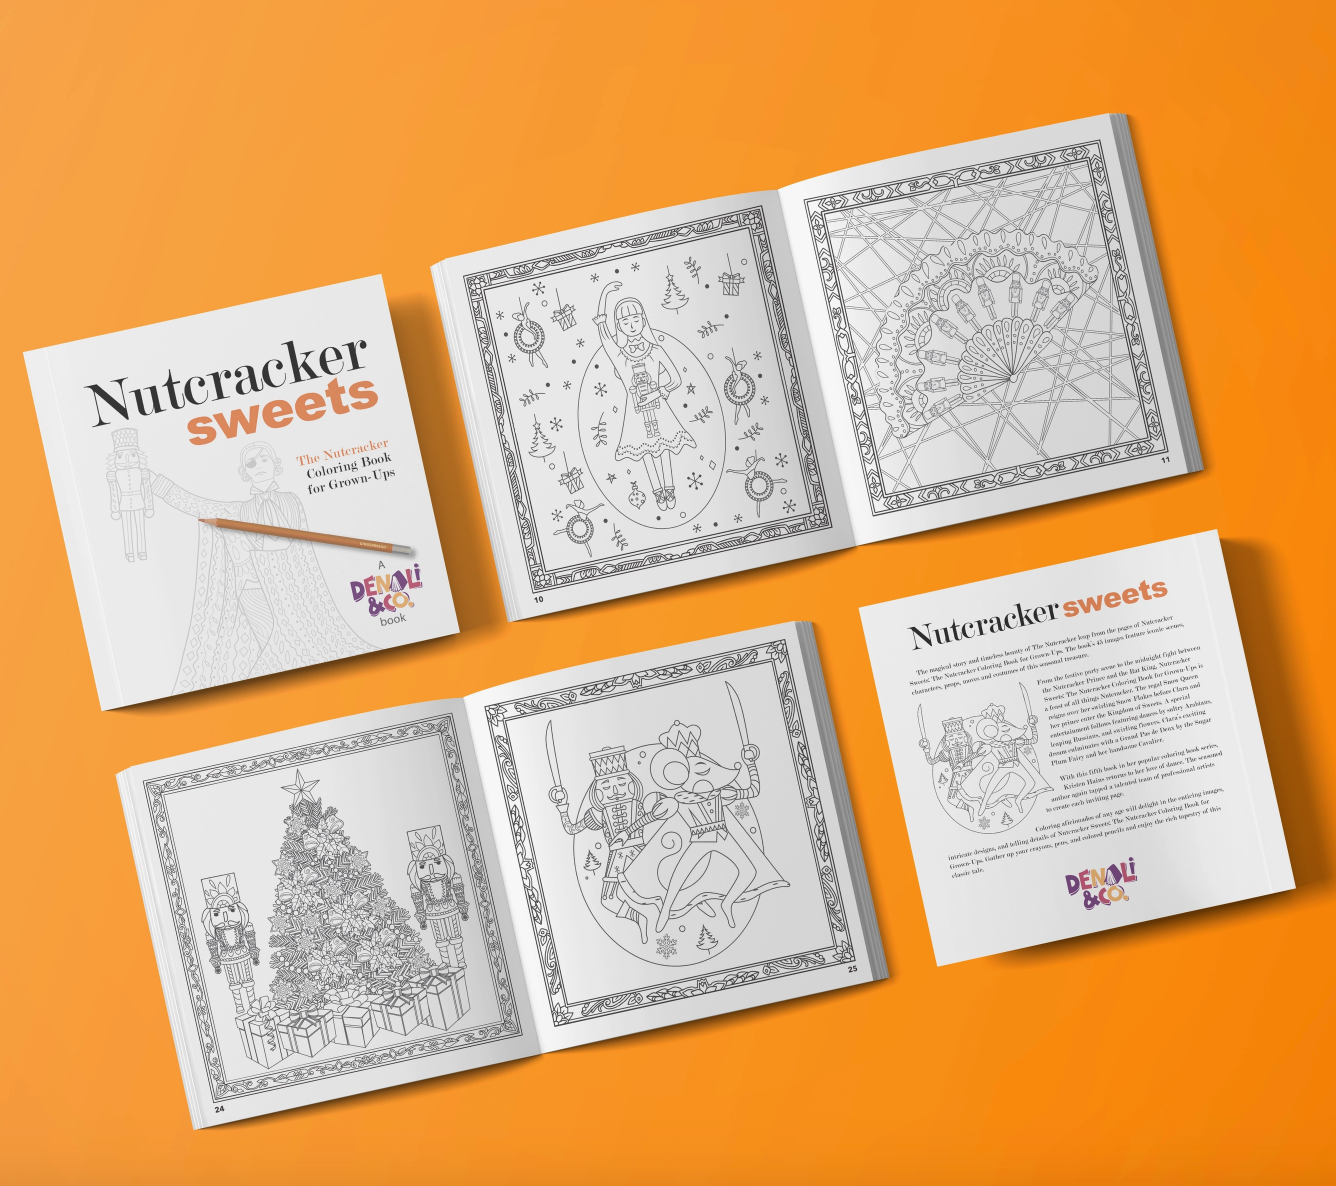 Nutcracker Sweets: The Nutcracker Coloring Book for Grown-Ups